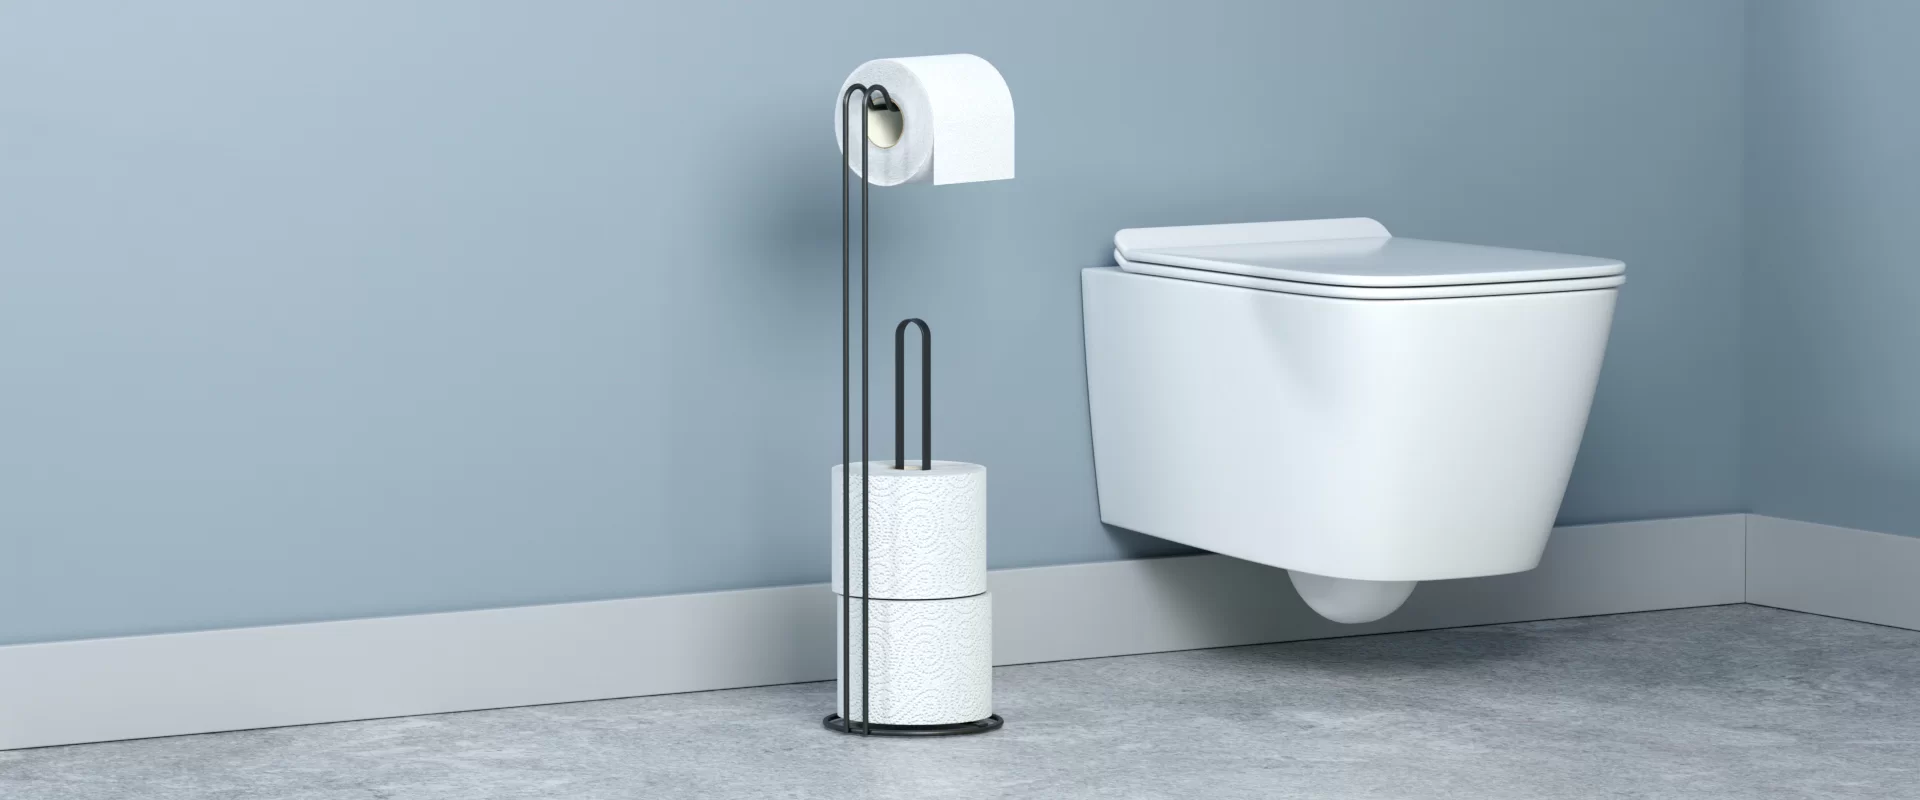 Originally Designed Multifunctional Toilet Paper Roll holder, Brush and Trash Bin Stands 